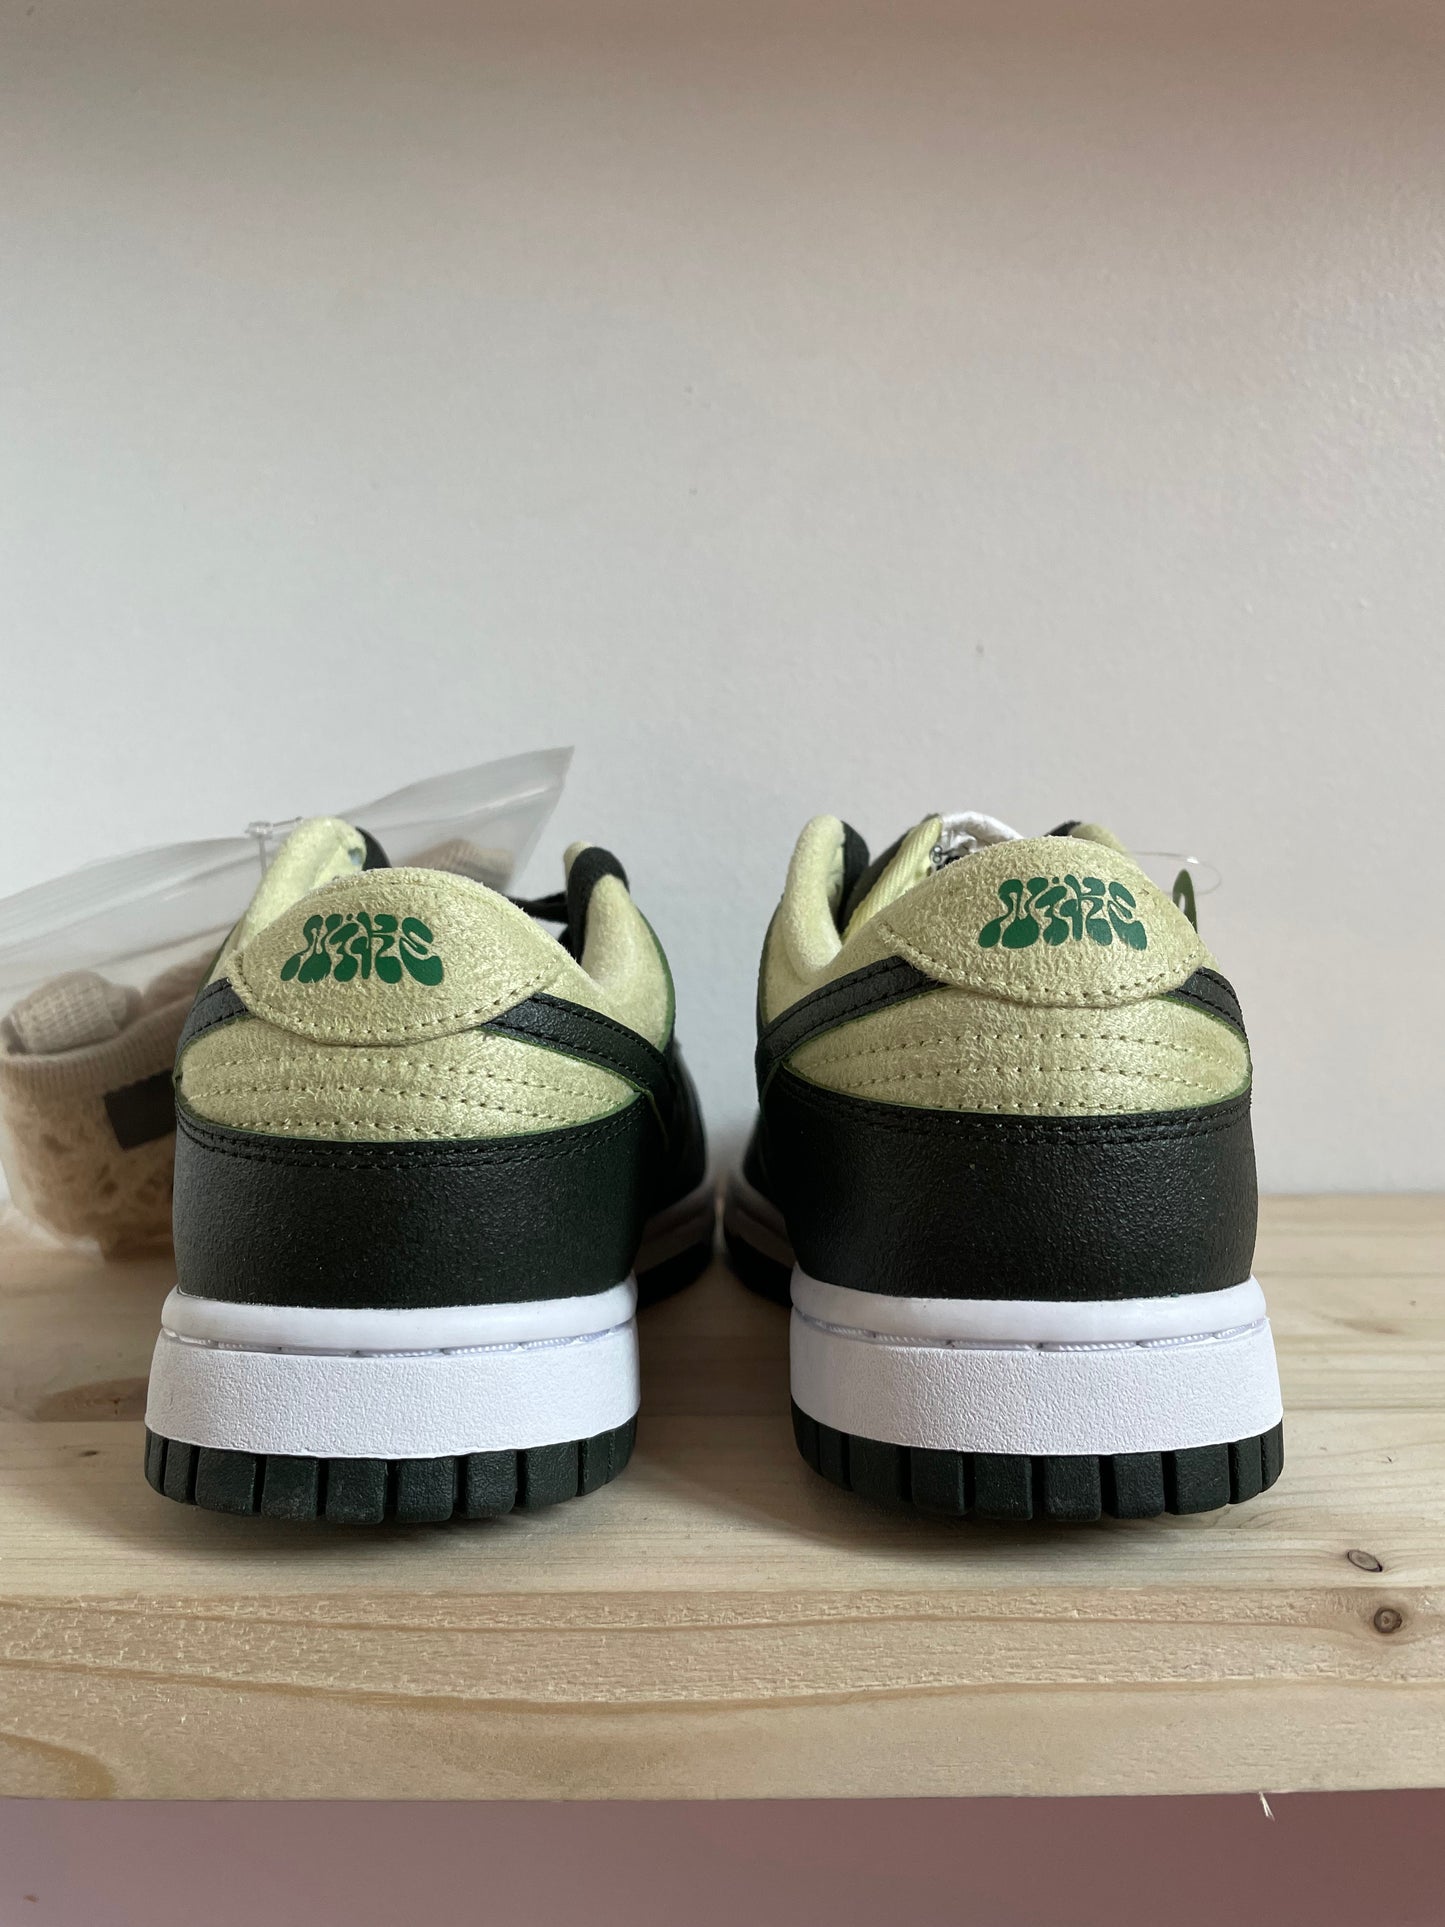 ANTWERP SNKR - Nike Dunk Low LX "Avocado"